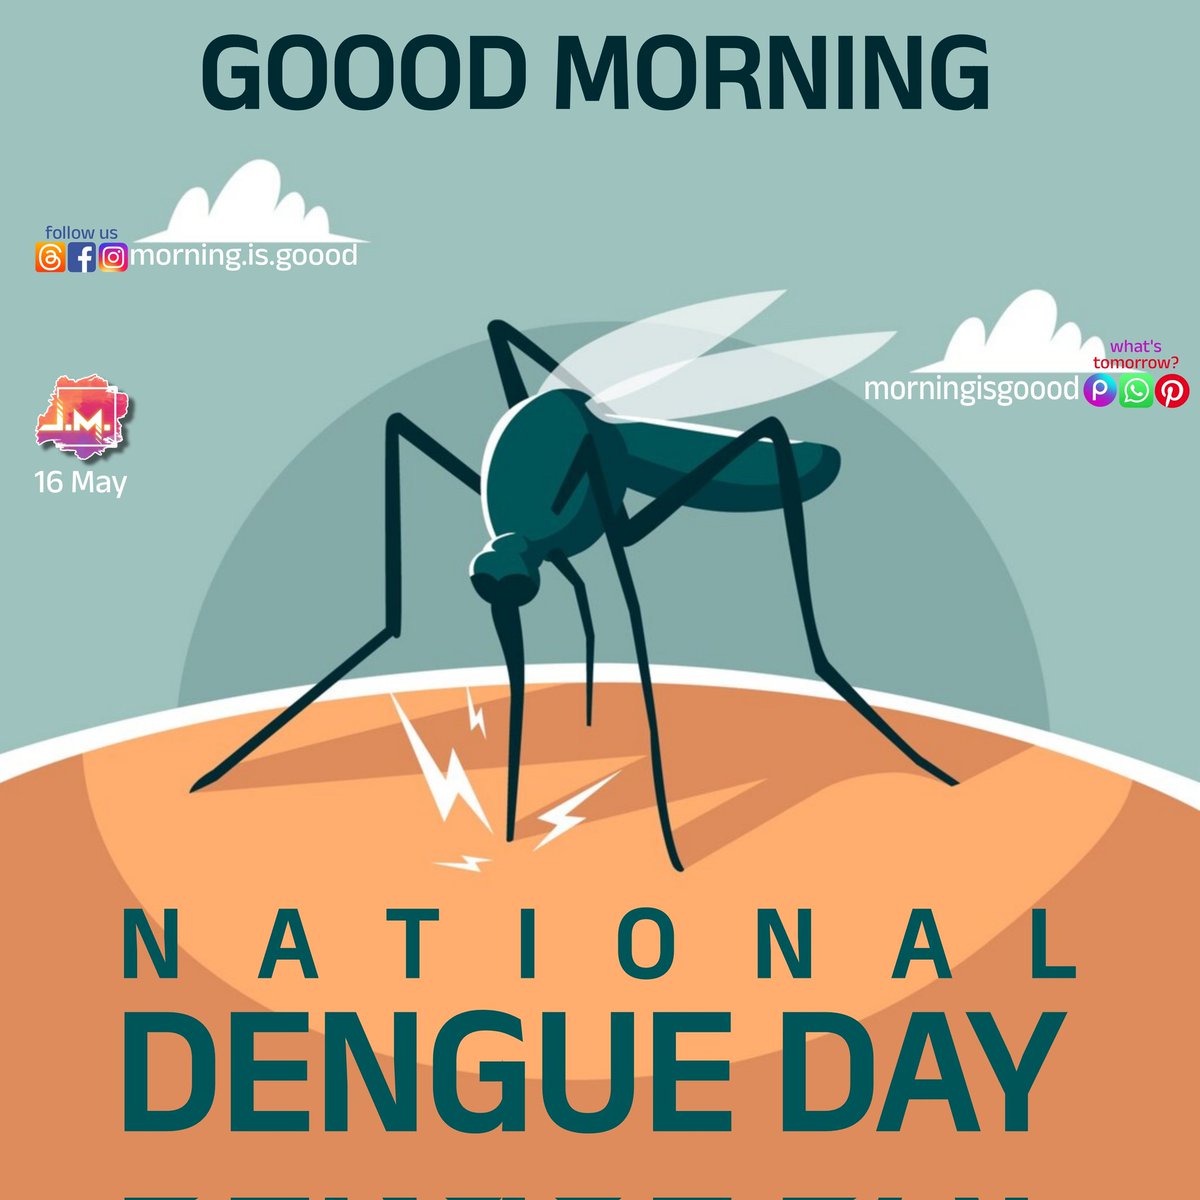 #dengue #mosquito #malaria #chikungunya #zika #covid #mosquitos #mosquitobites #aedesaegypti #controledepragas #mosquitoes #limpezadecaixadagua #health #denguefever #mosquitokiller #mosquitorepellent #pestcontrol #virus #aedes #dedetiza #saude #goodmorning #jayesha_mangukiya